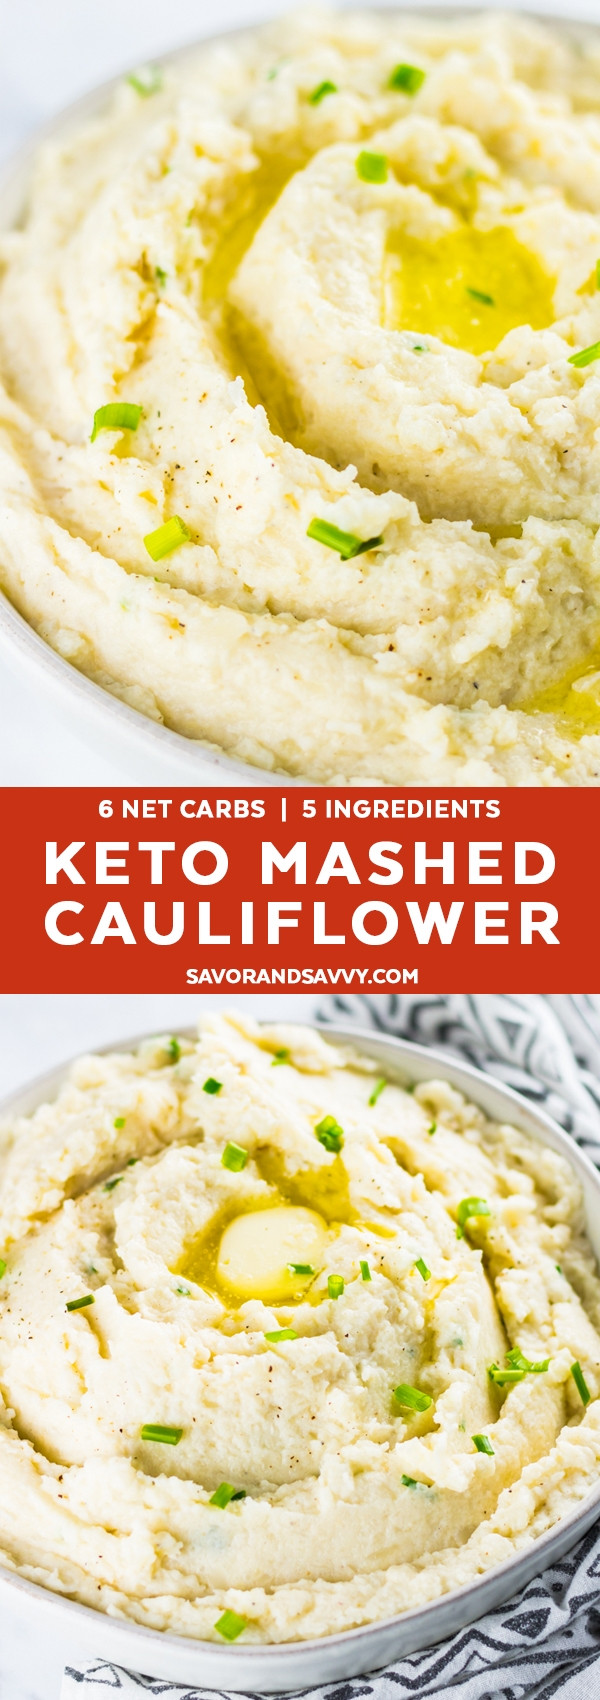 Cauliflower Mash Keto
 Keto Mashed Cauliflower Recipe